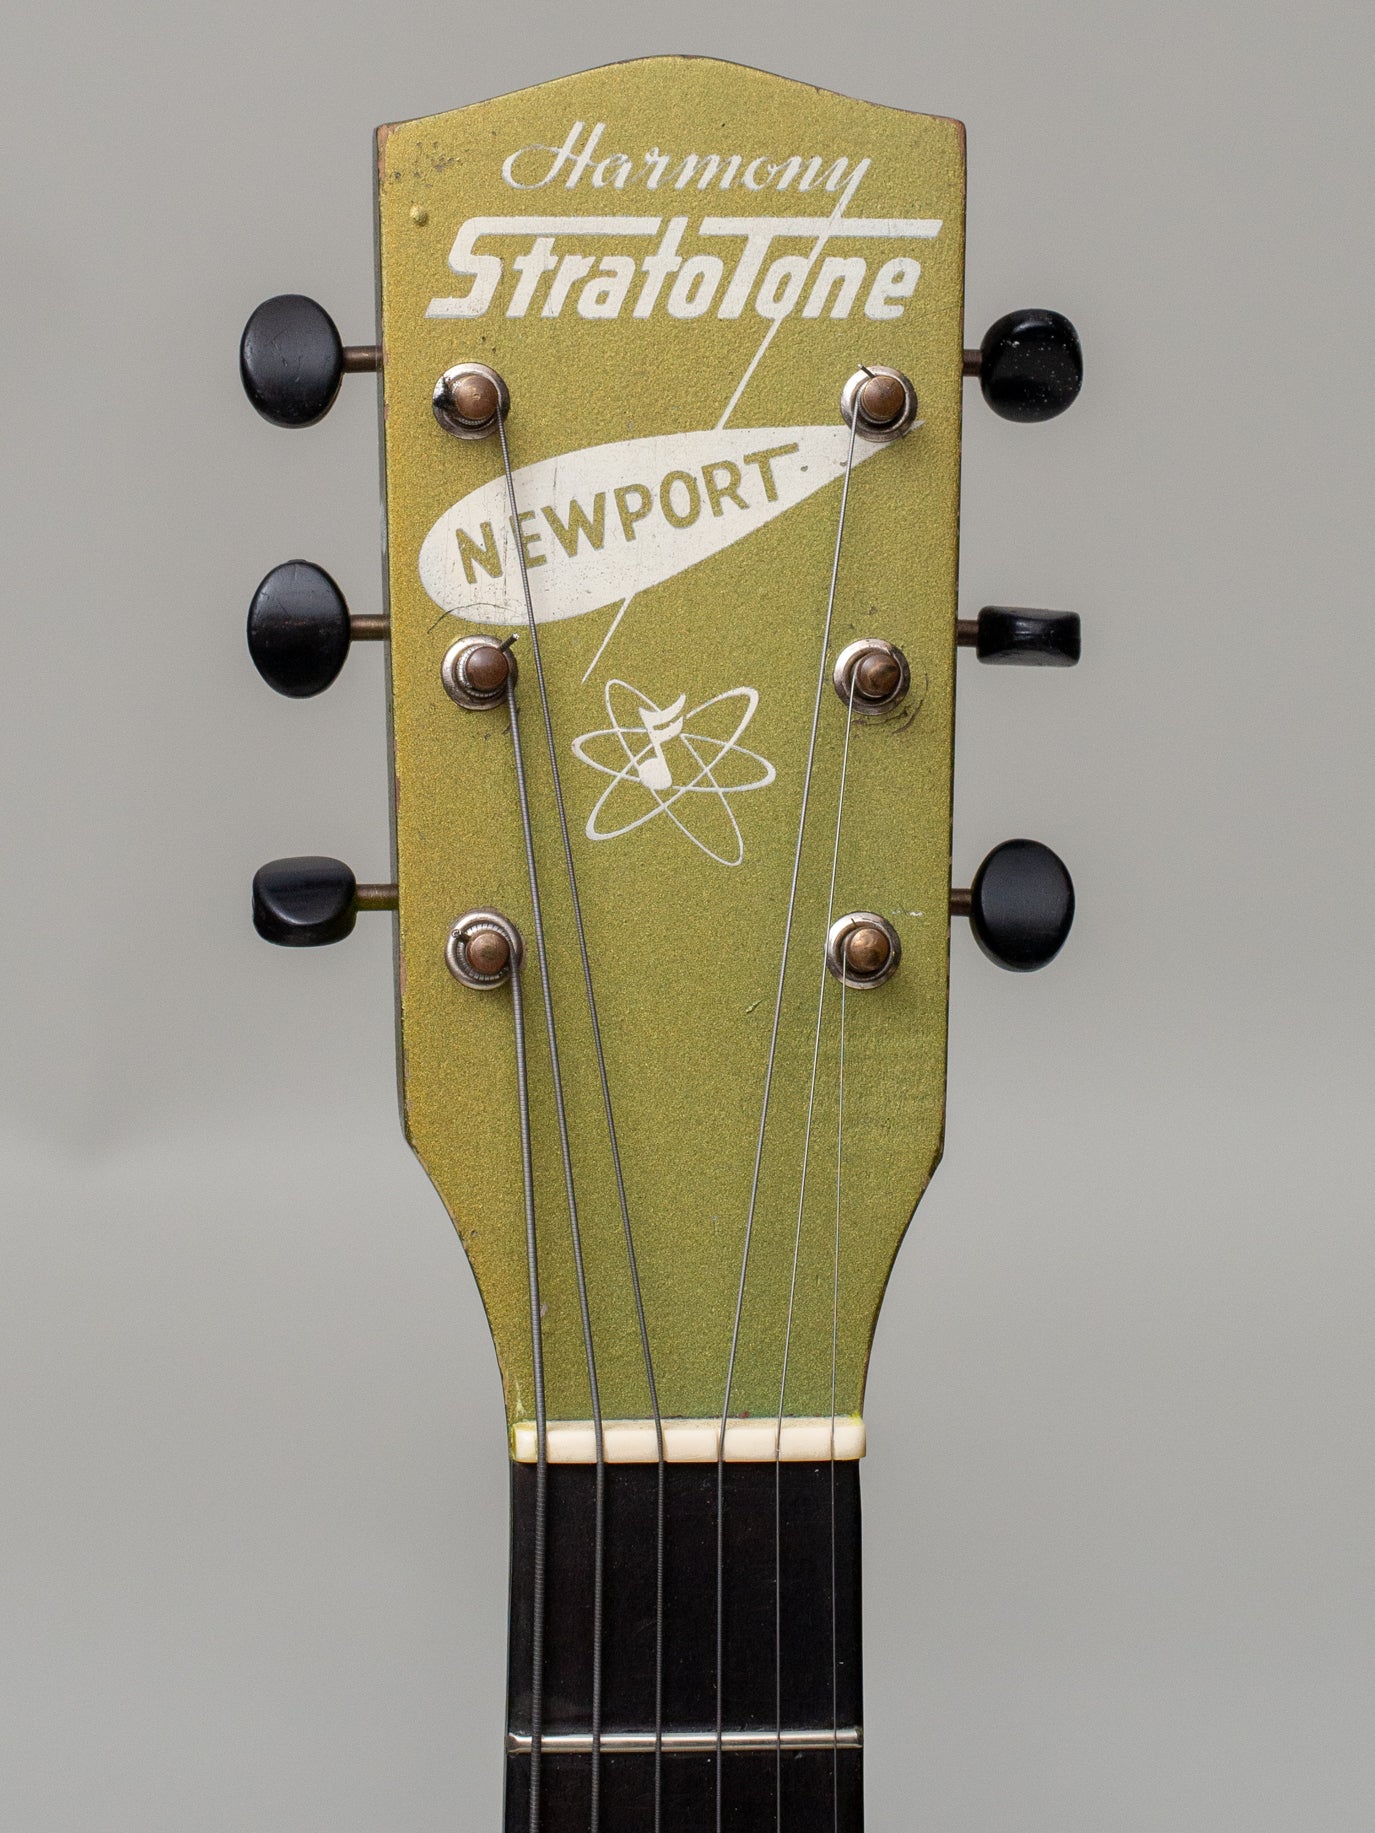 1955 Harmony Stratotone Newport